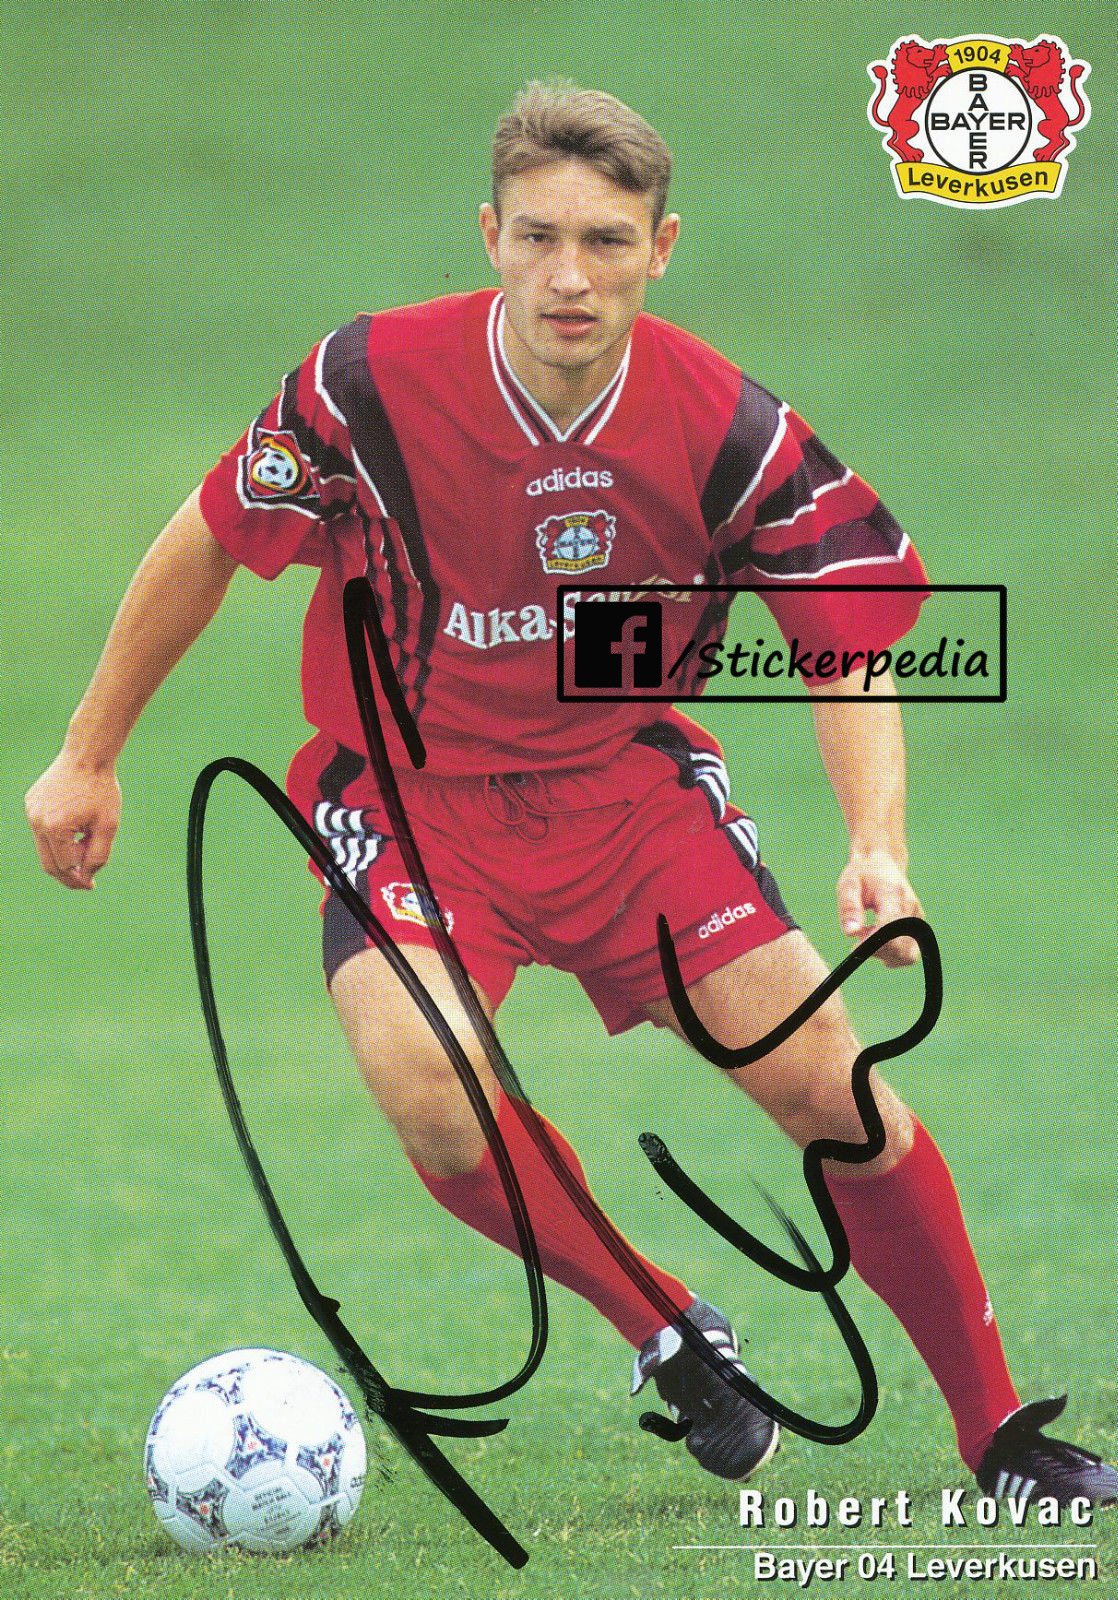 Stickerpedia Robert Kovac Bayer Leverkusen 1996 97 T Co 0a5xs3byjl Twitter